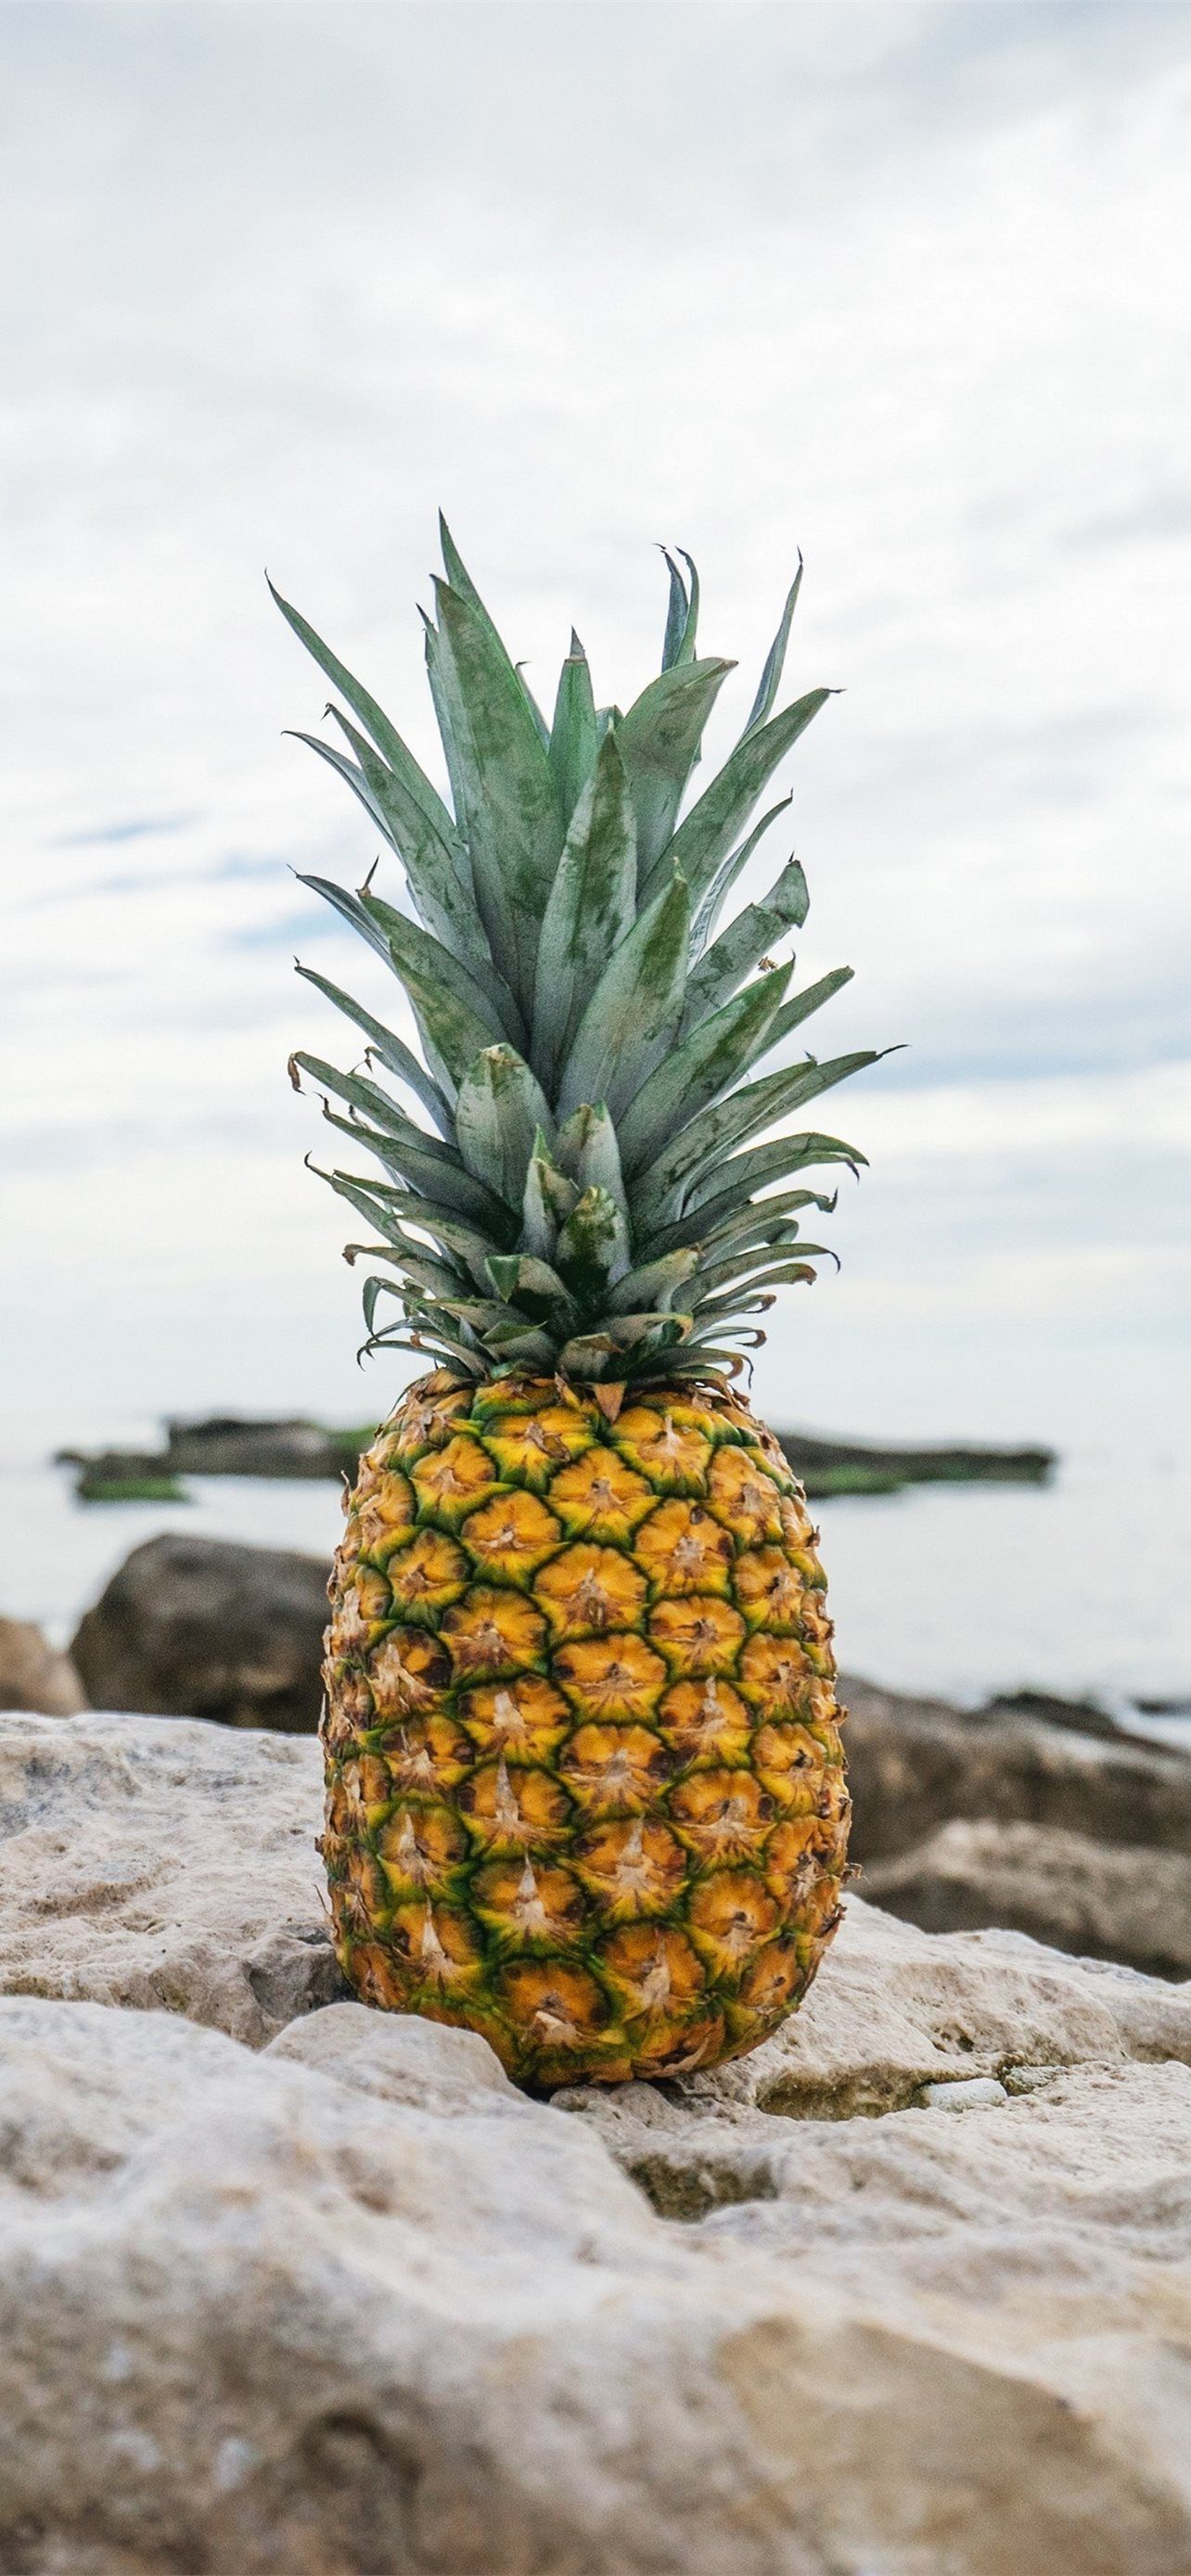 Pineapple Rocks Beach iPhone Wallpaper Free Download